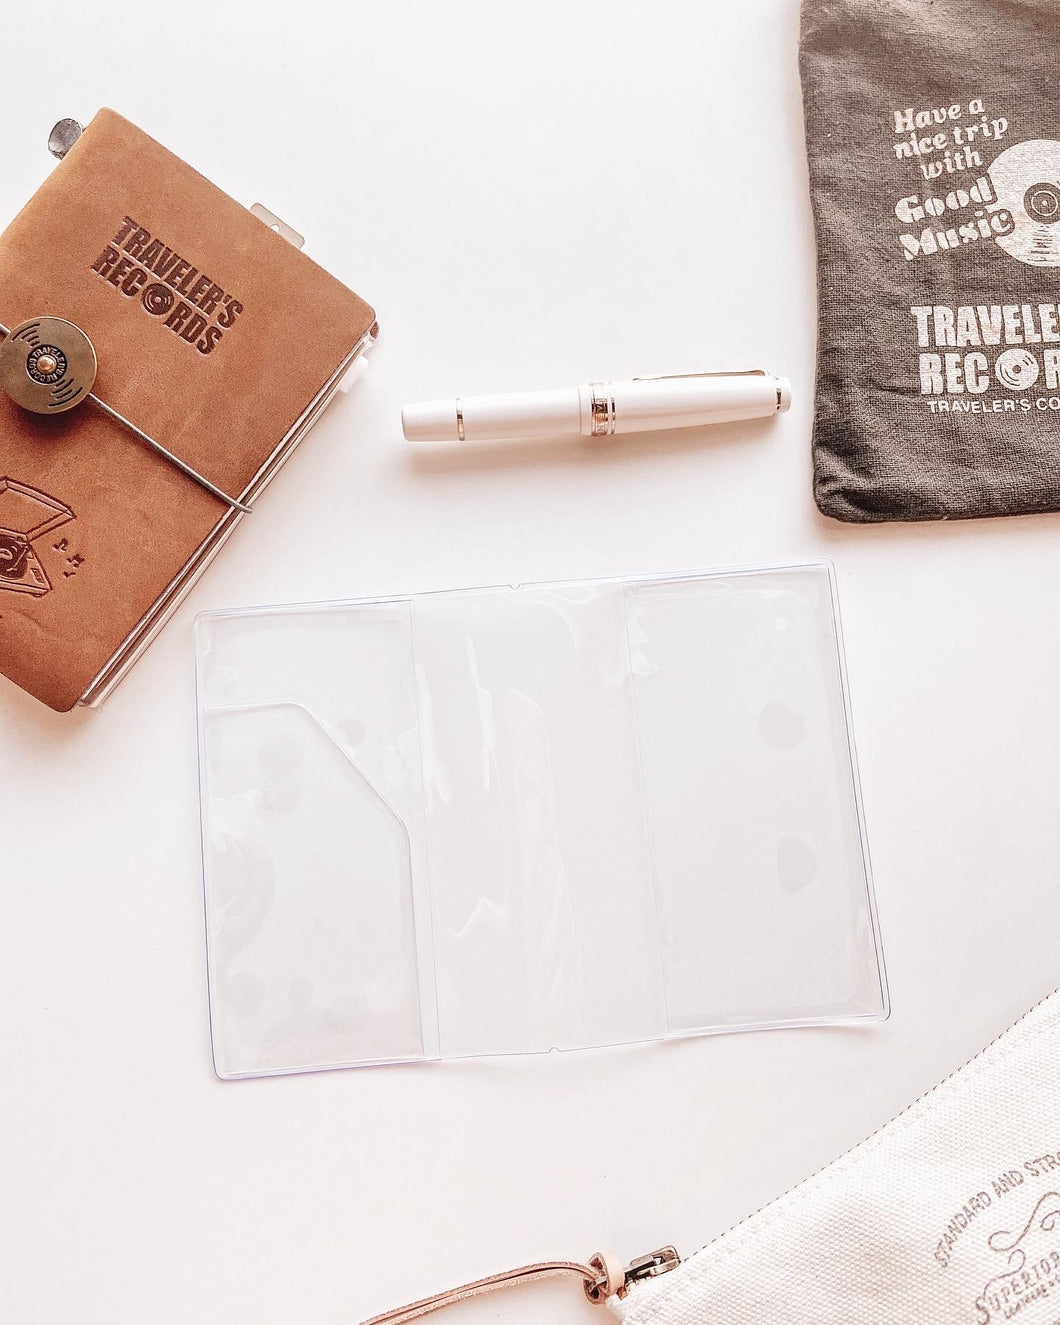 JD143 - Passport TN - Clear Vinyl Dashboards with secretarial pocket